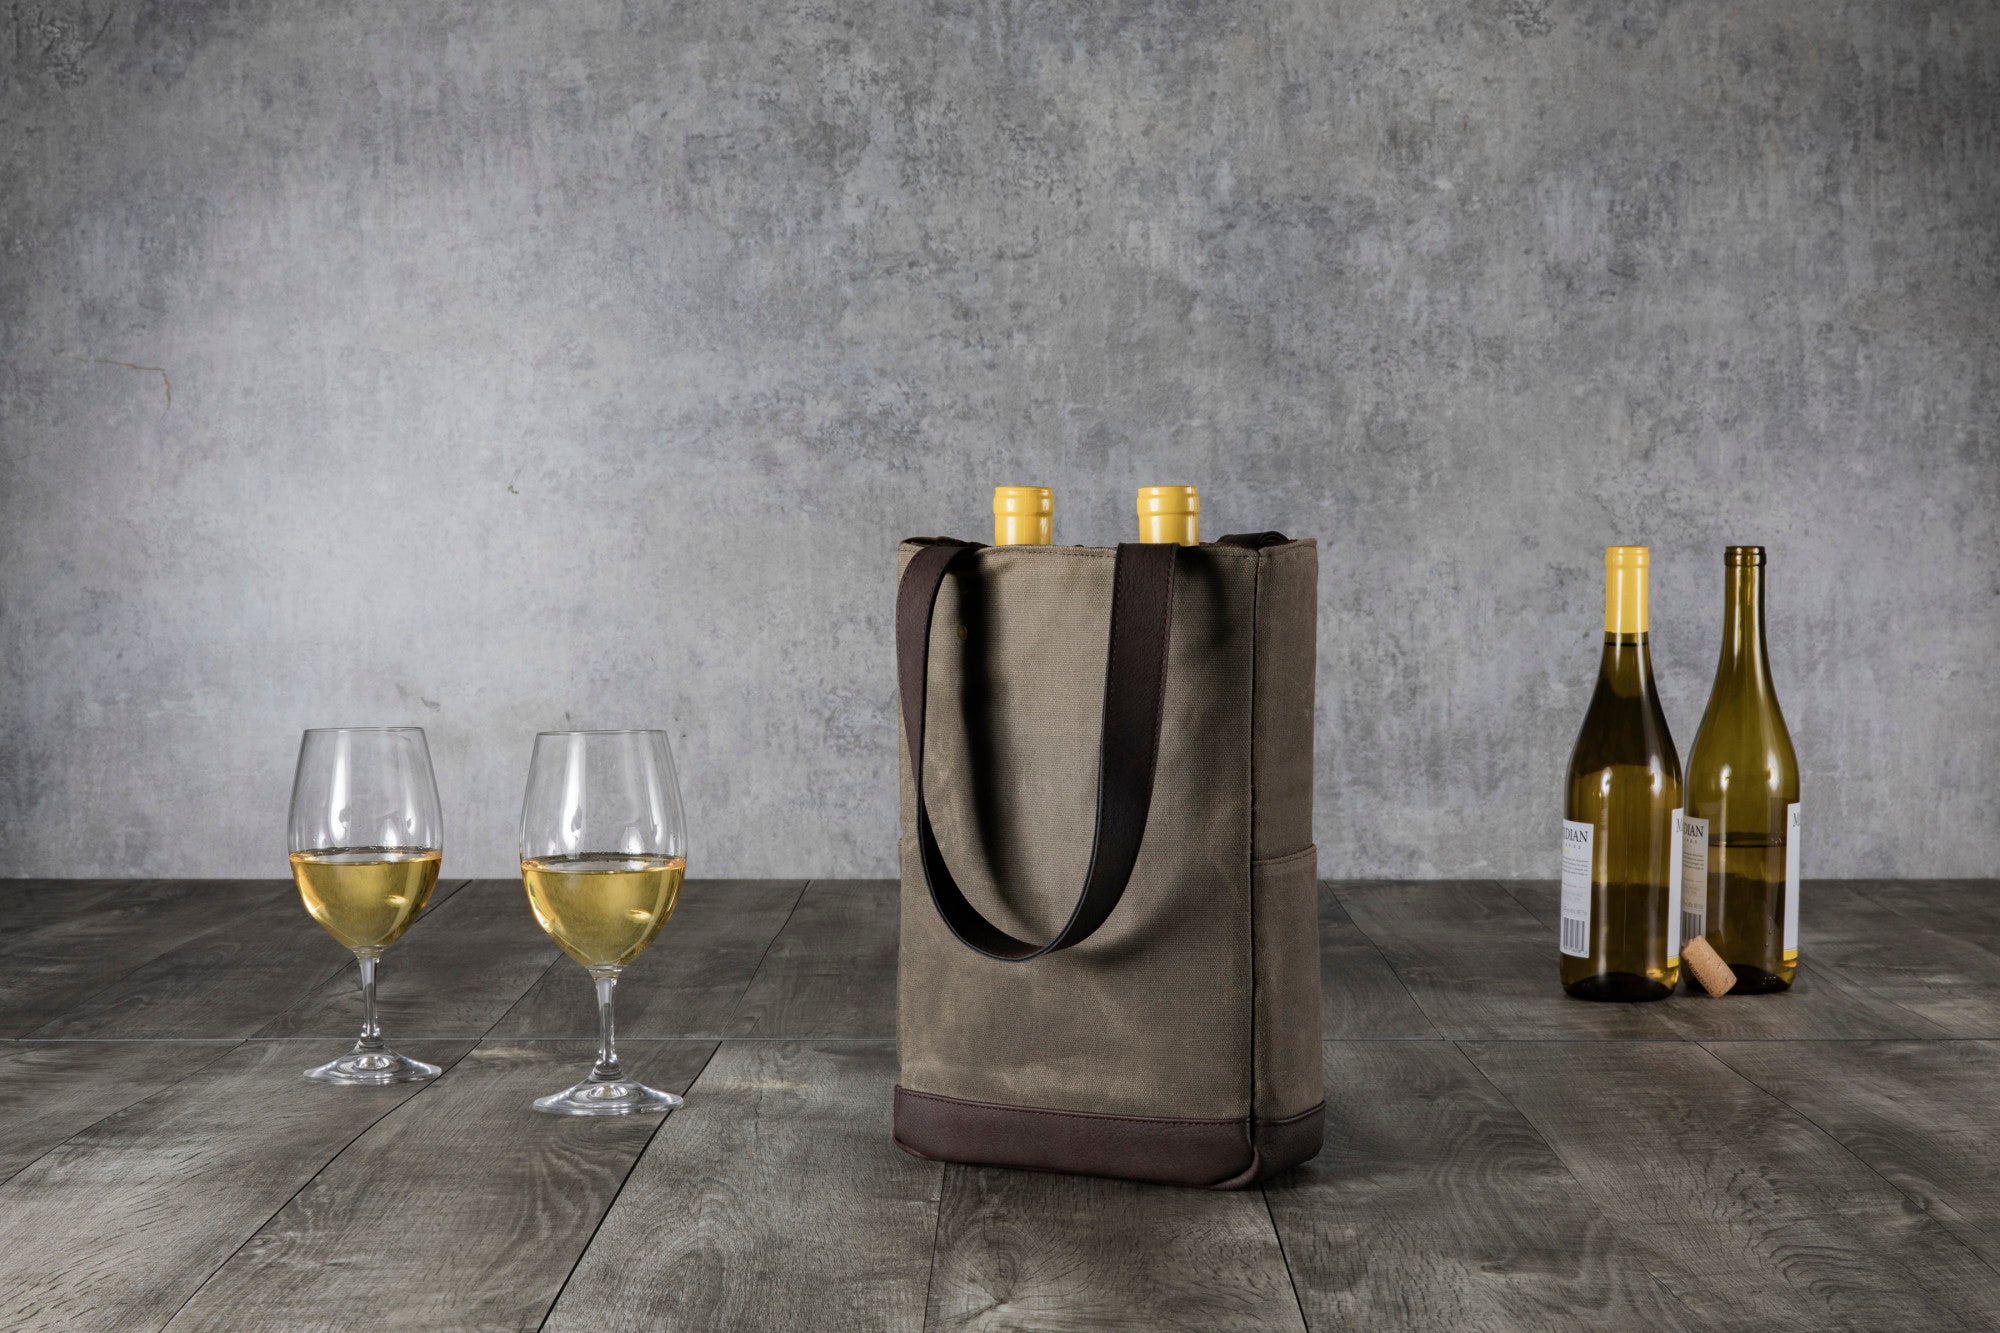 Carolina Panthers - 2 Bottle Insulated Wine Cooler Bag